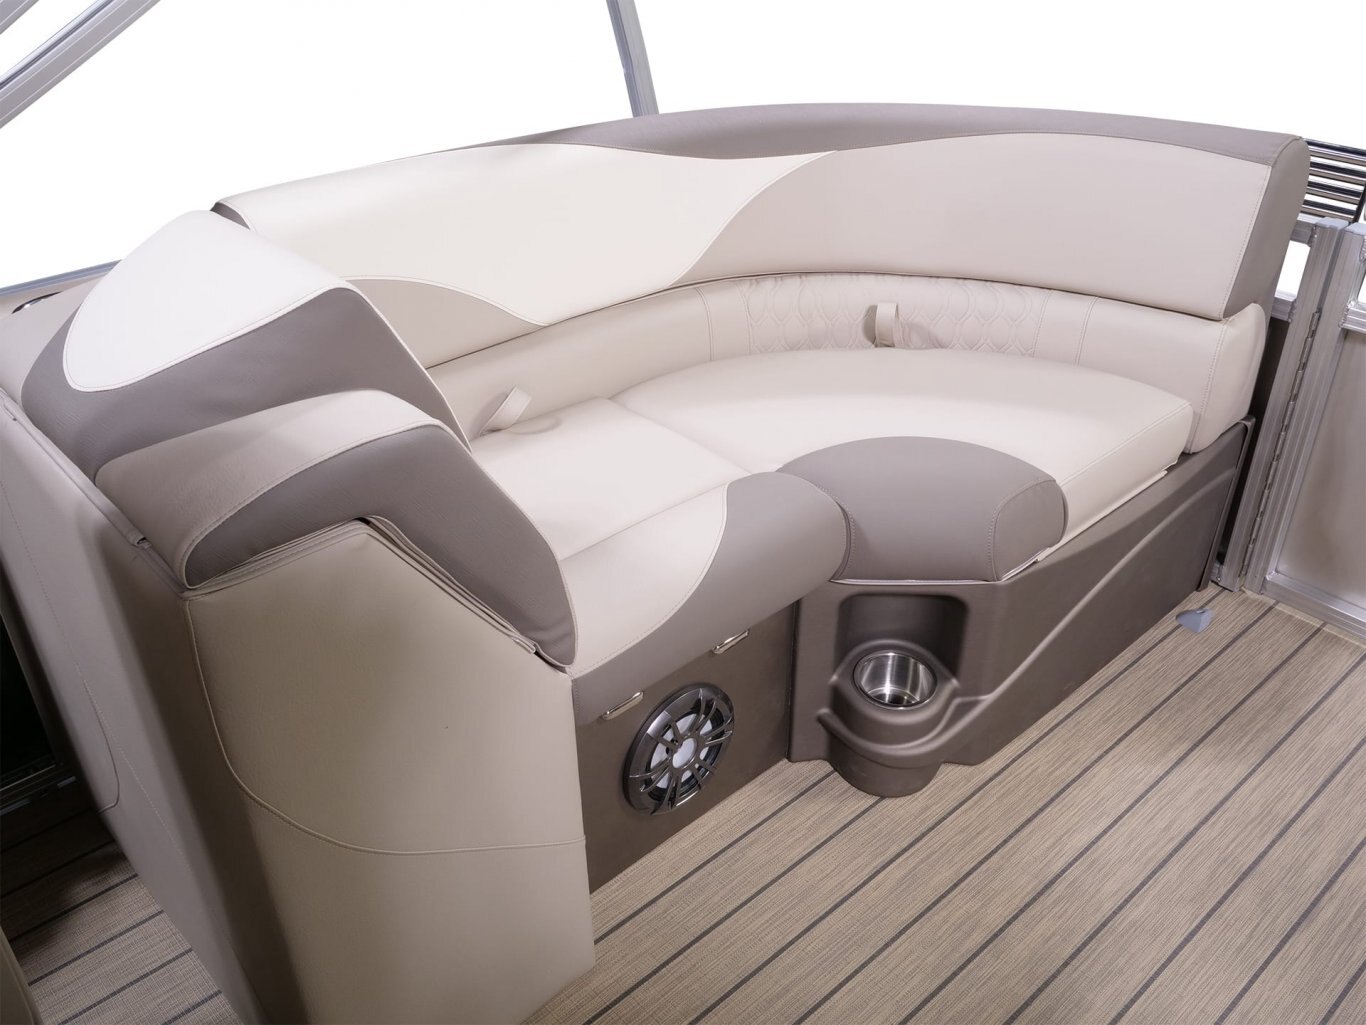 Legend Boats Q Series Lounge Sport PRO